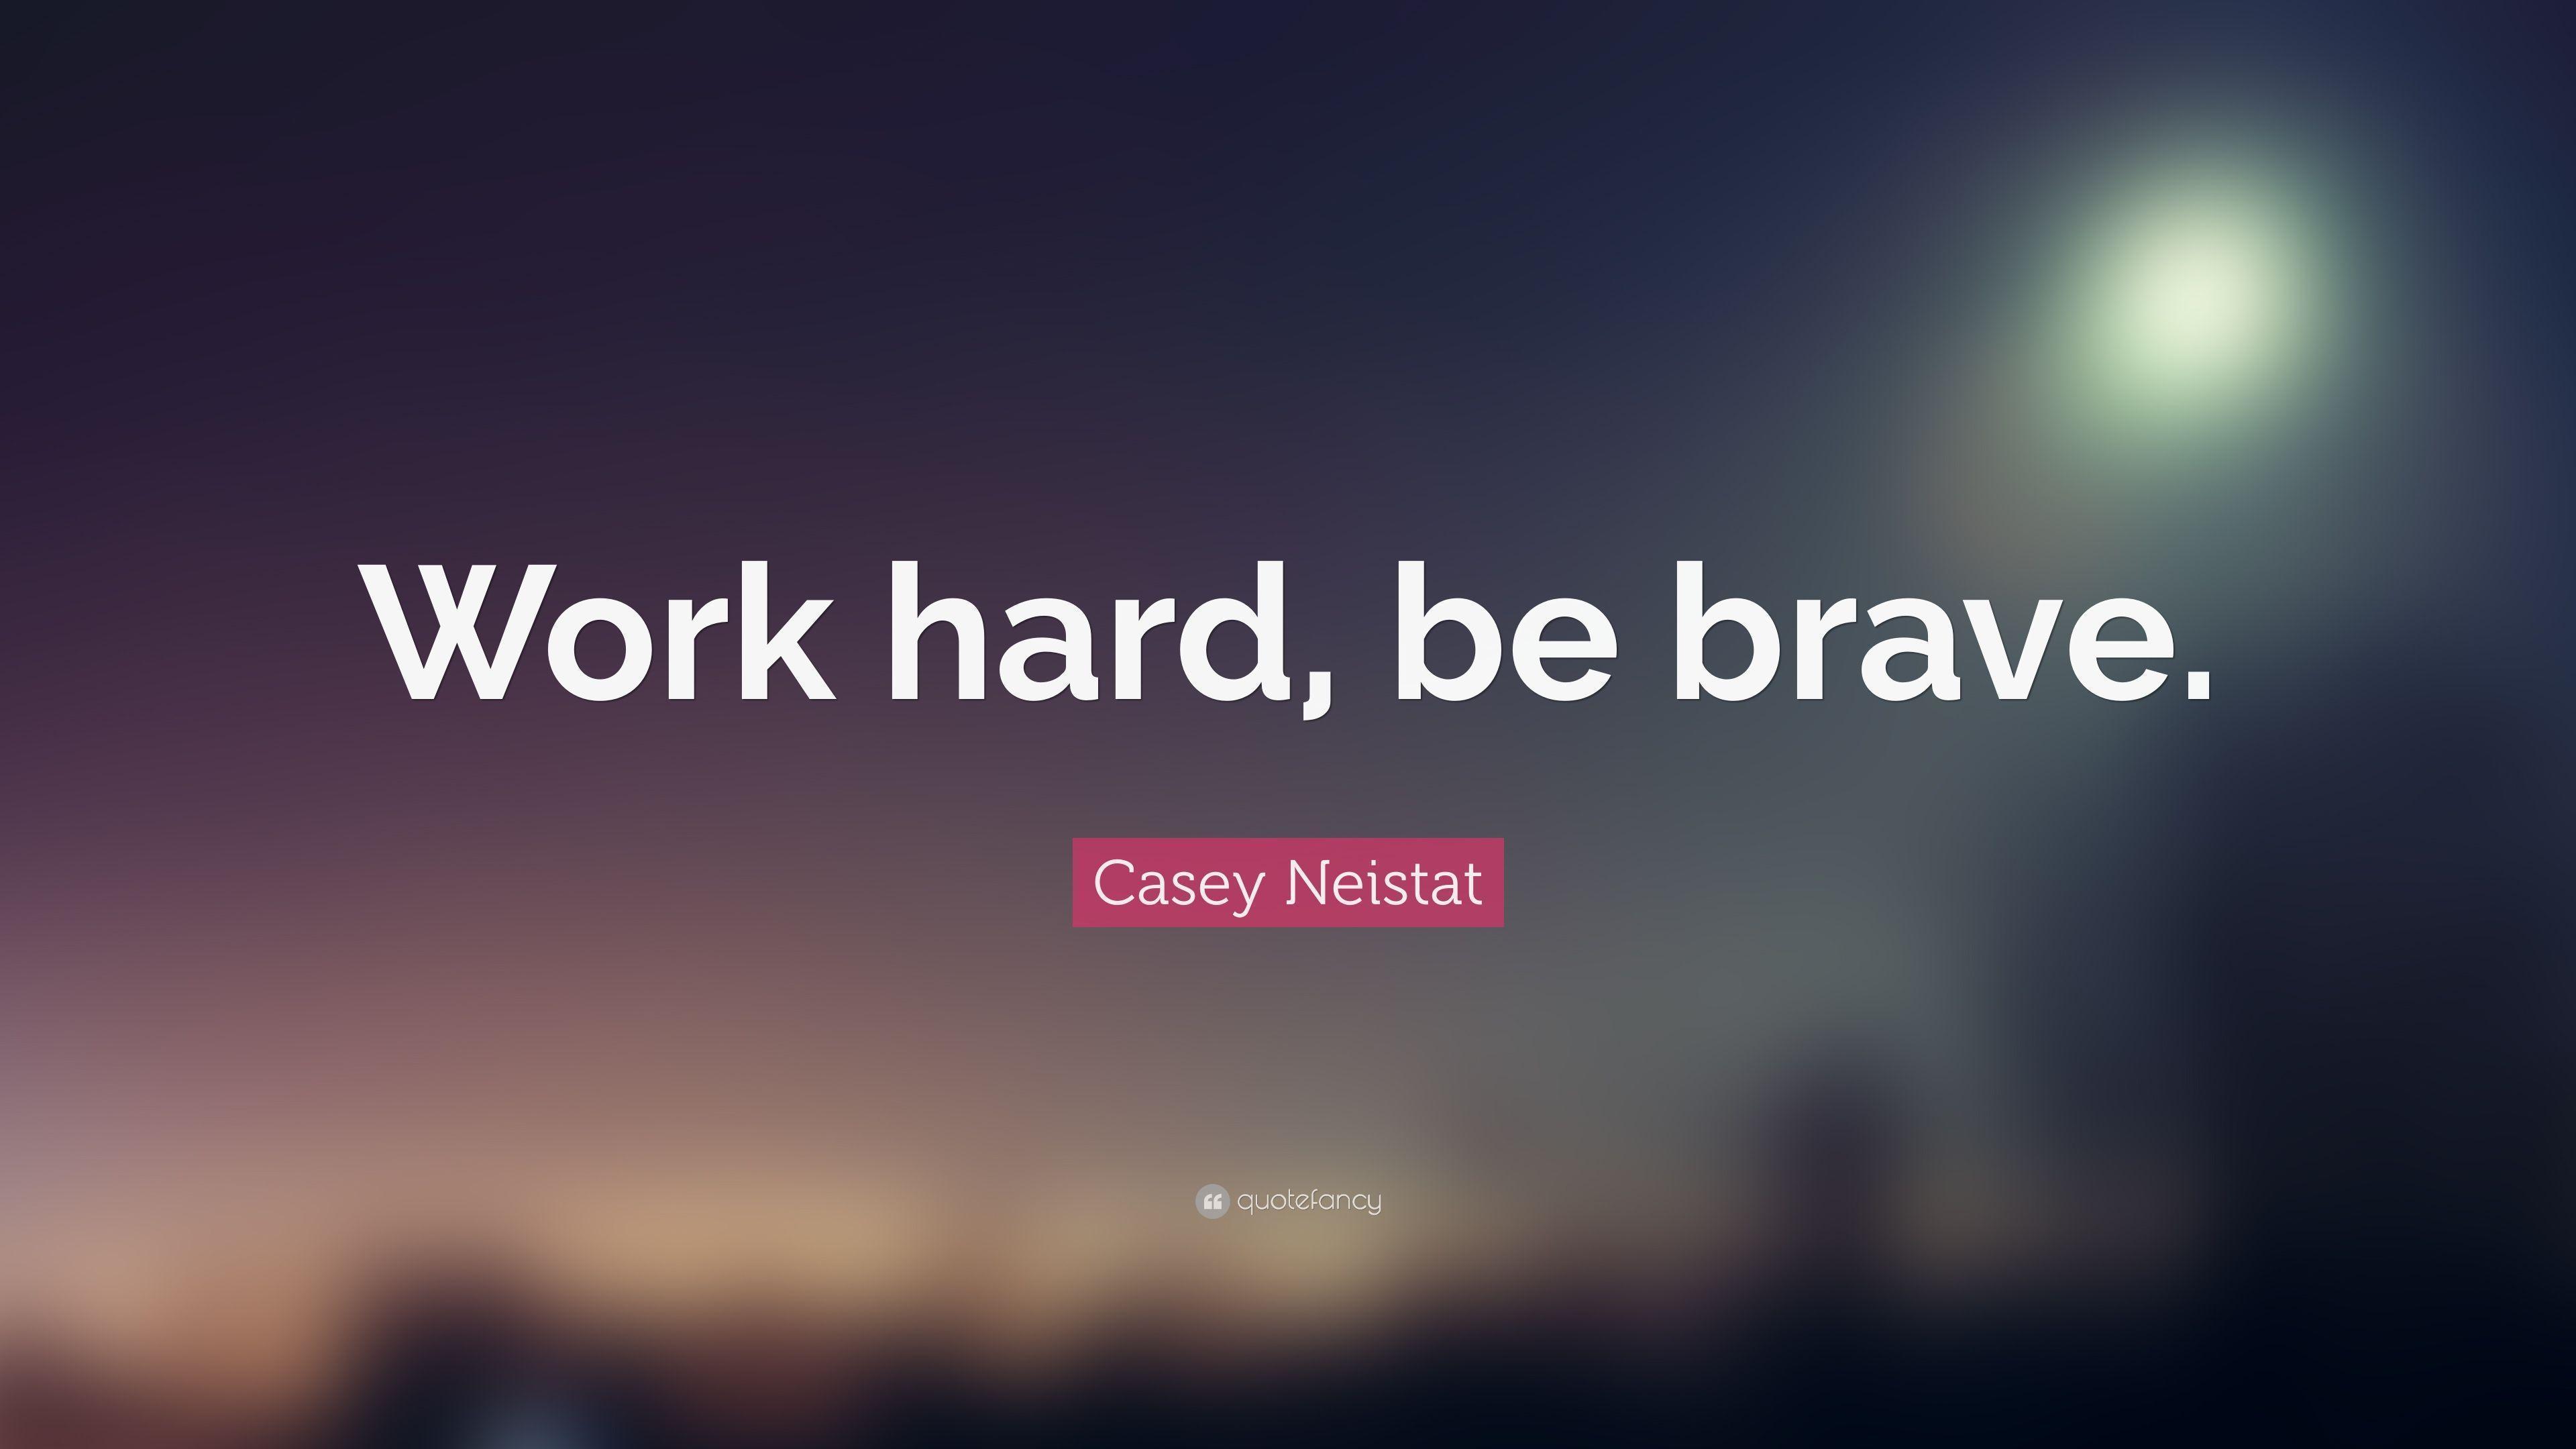 Casey Neistat Quote: “Work hard, be brave.” 17 wallpaper